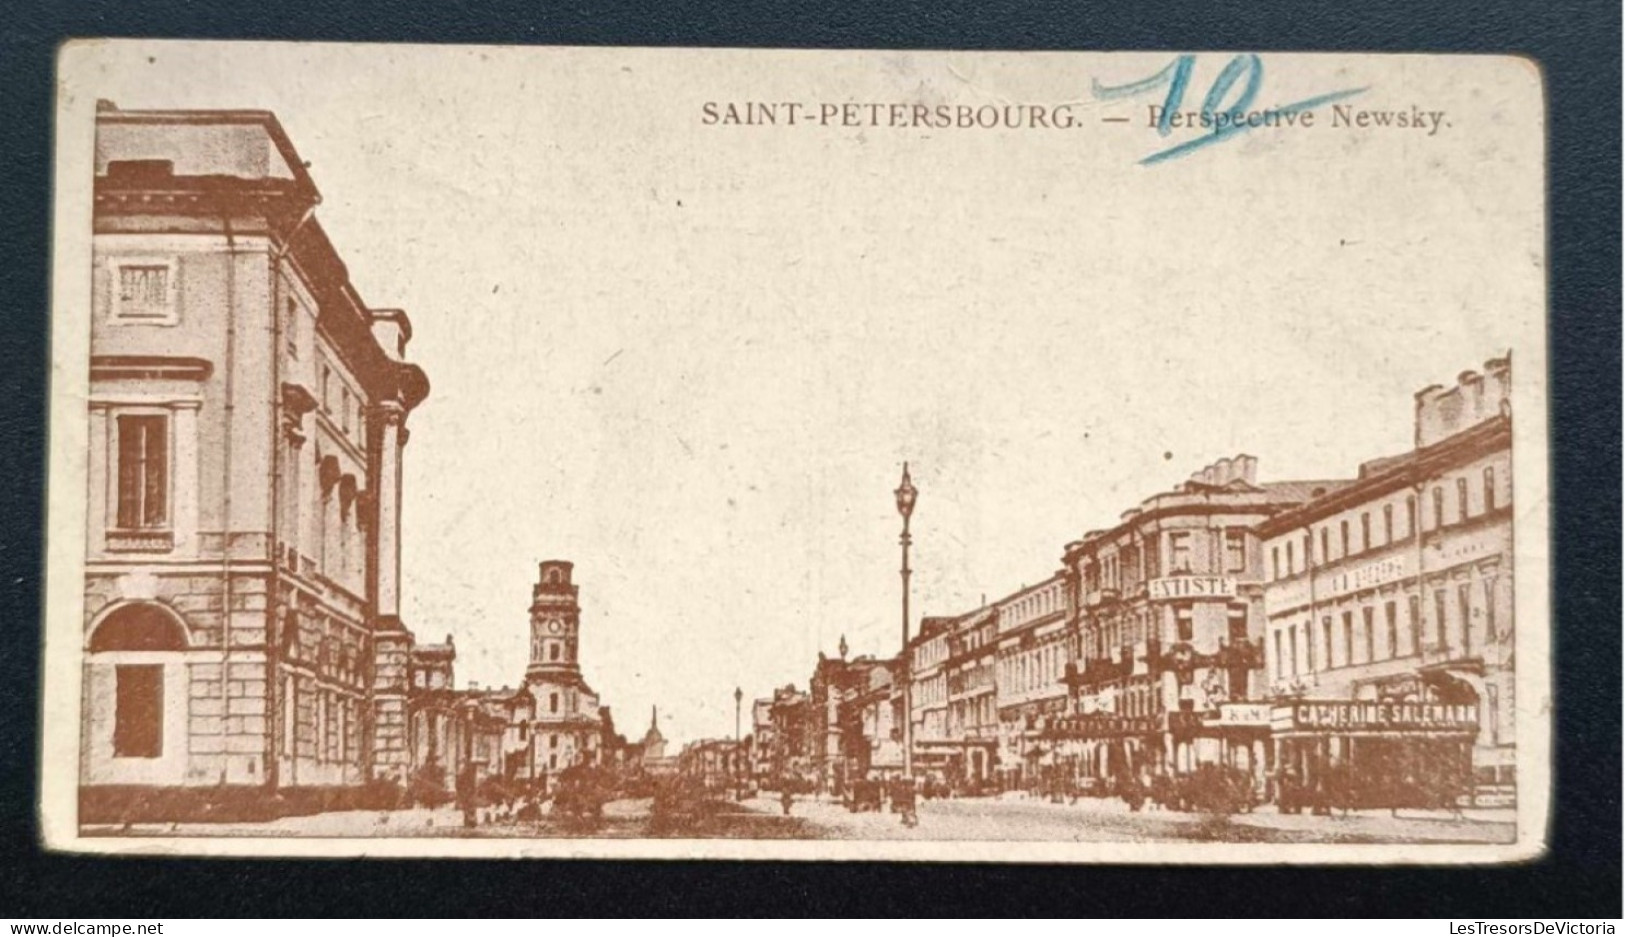 Russie - Saint Petersbourg - Perspective Newsky - Dim:7/13cm - Carte Postale Ancienne - Russie